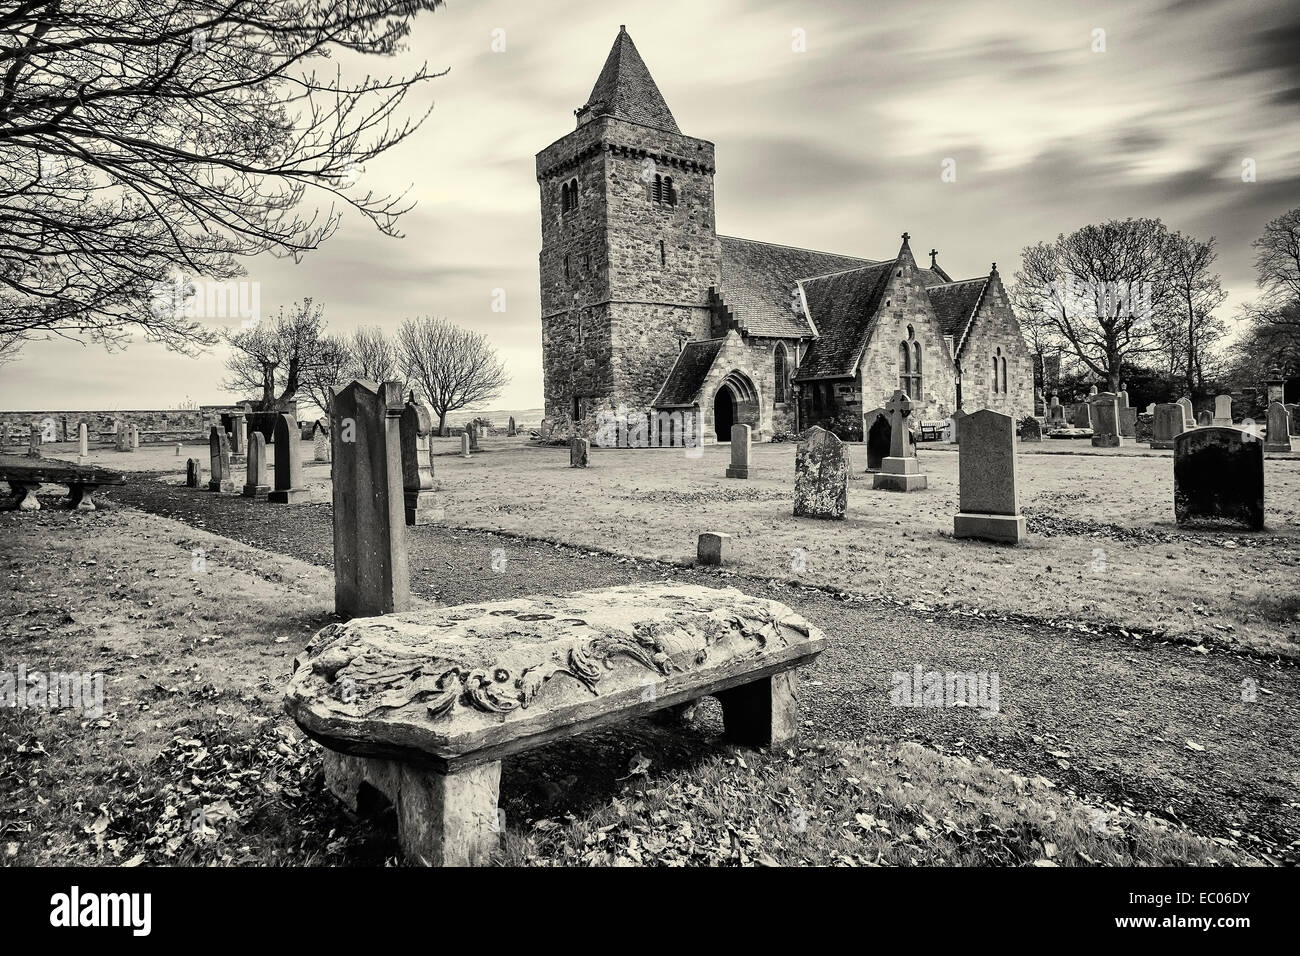 Aberlady parish church and graveyard (kirkyard) in East Lothian, Scotland. Stock Photo